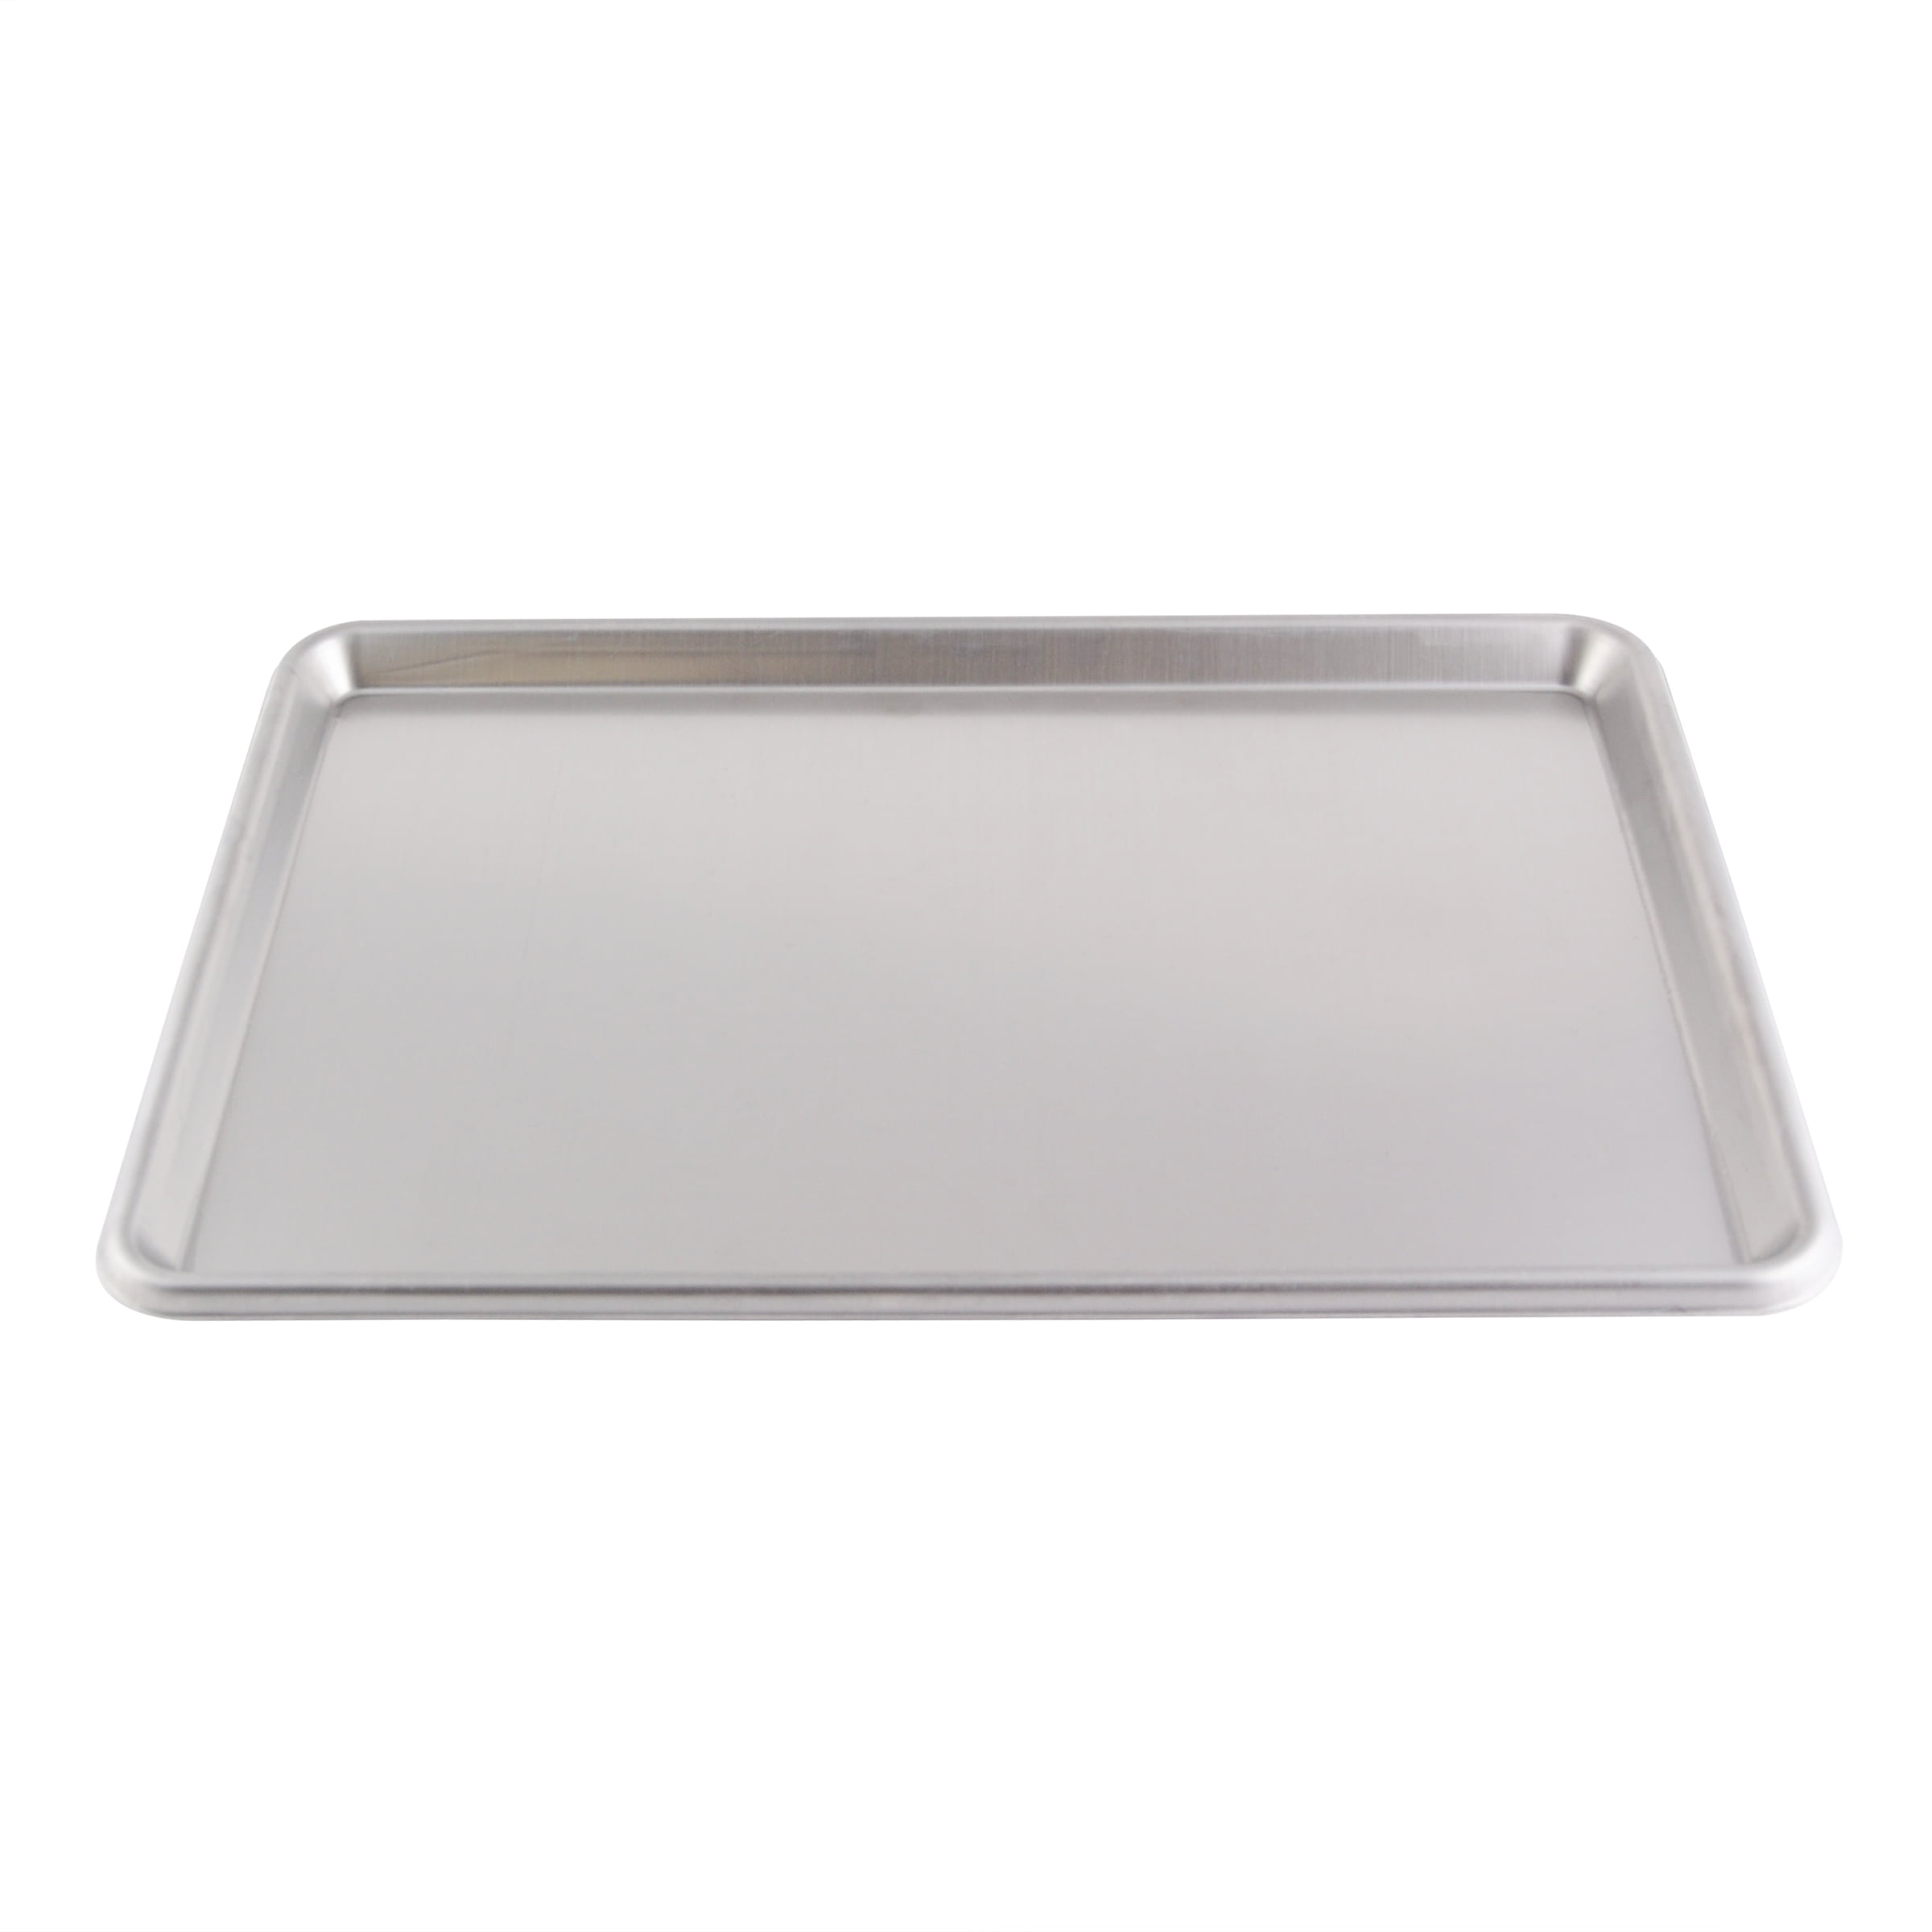 Sil-Eco E-95126 Baking Pan, Half Sheet Size, 13-Inch x 18-Inch